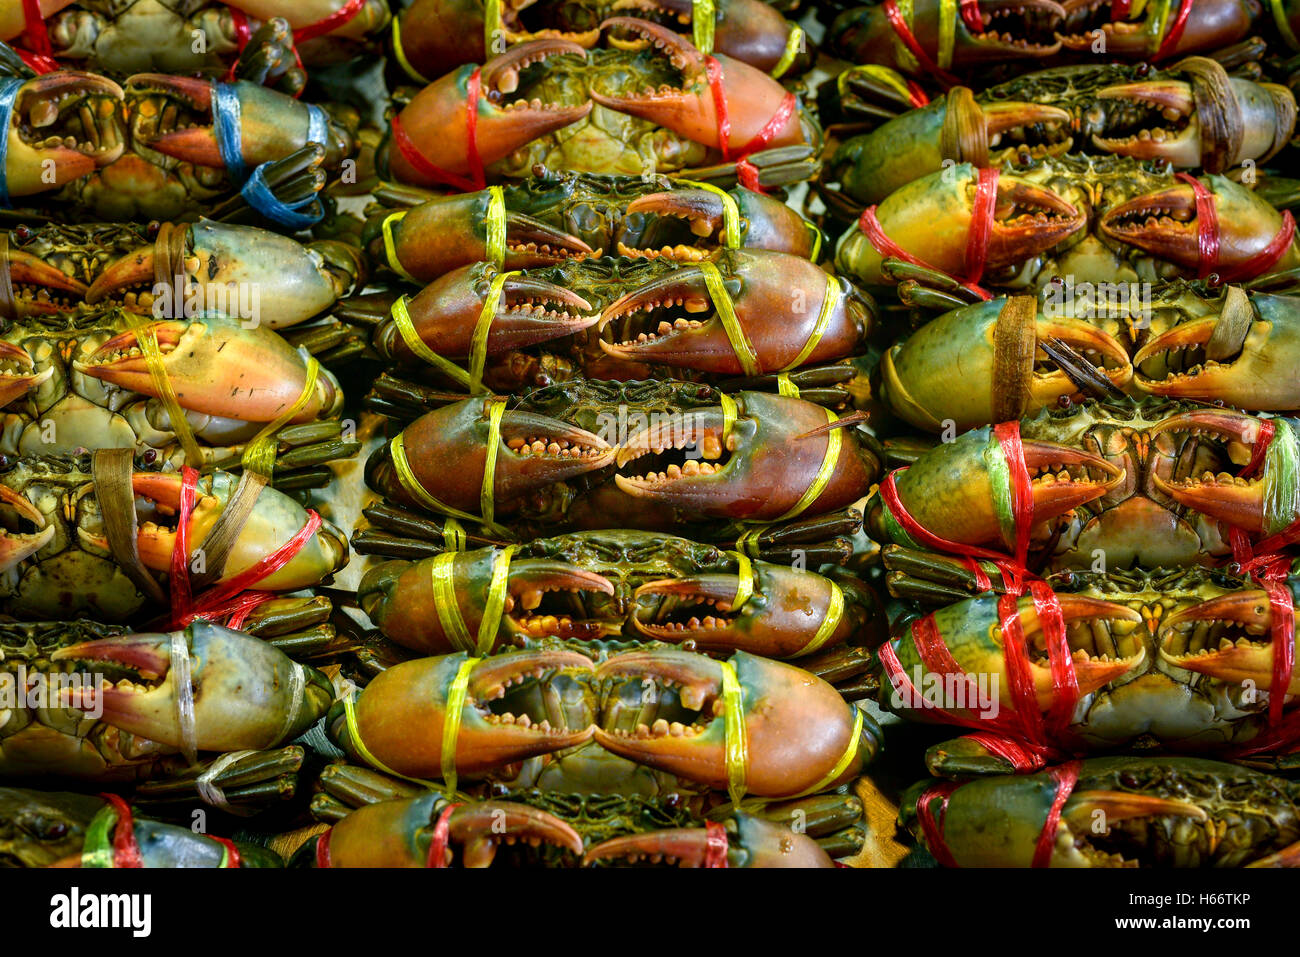 Serrated mud crab, Mangrove crab, Black crab, Giant mud crab, Scylla serrata, sea food Stock Photo